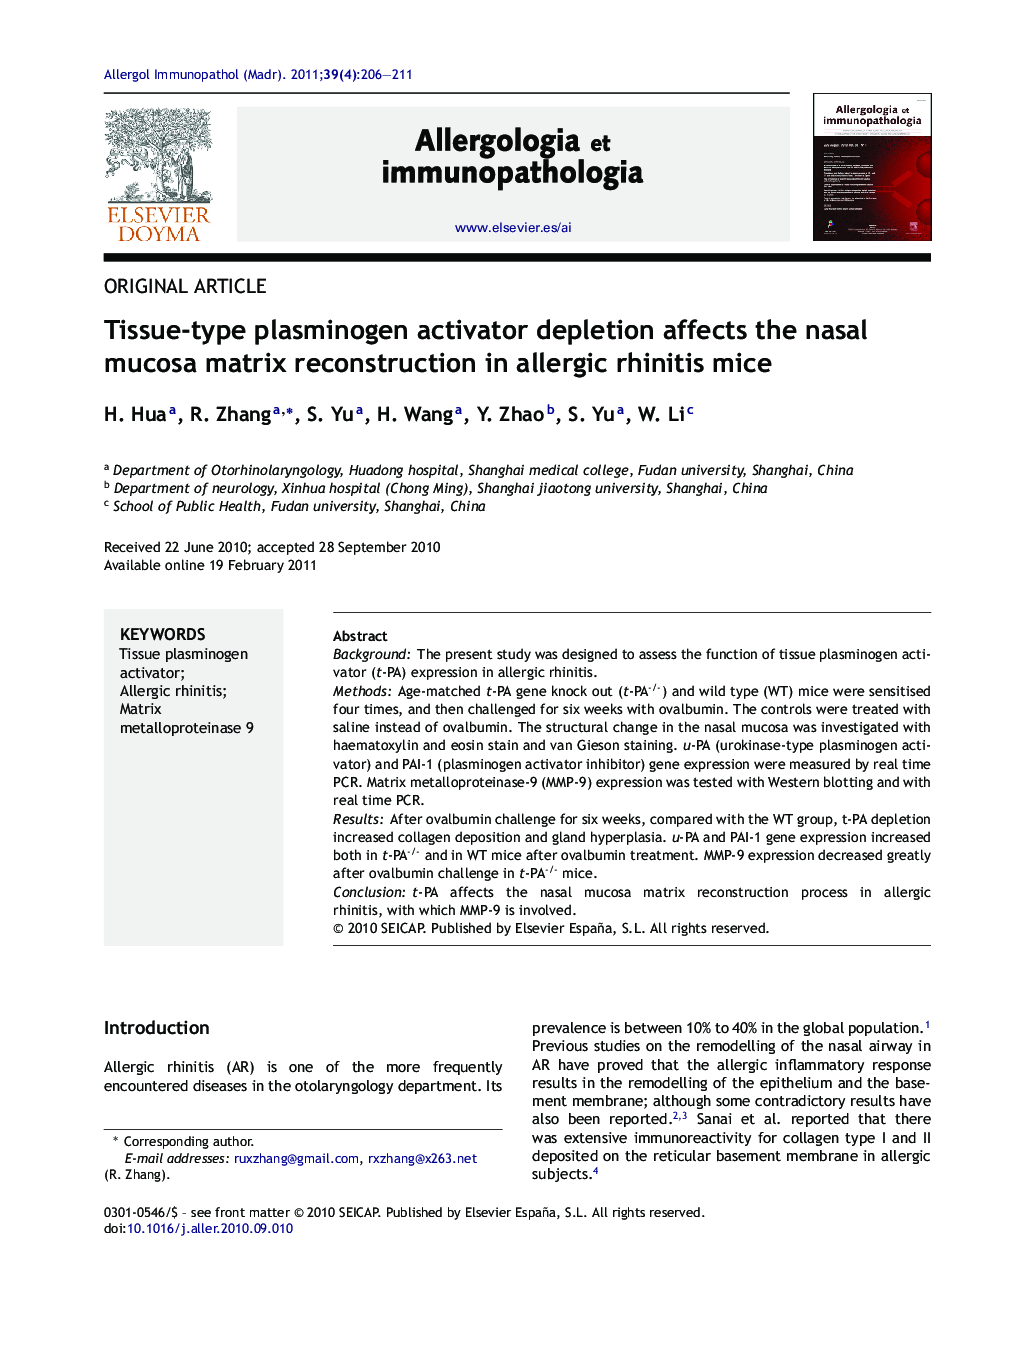 Tissue-type plasminogen activator depletion affects the nasal mucosa matrix reconstruction in allergic rhinitis mice